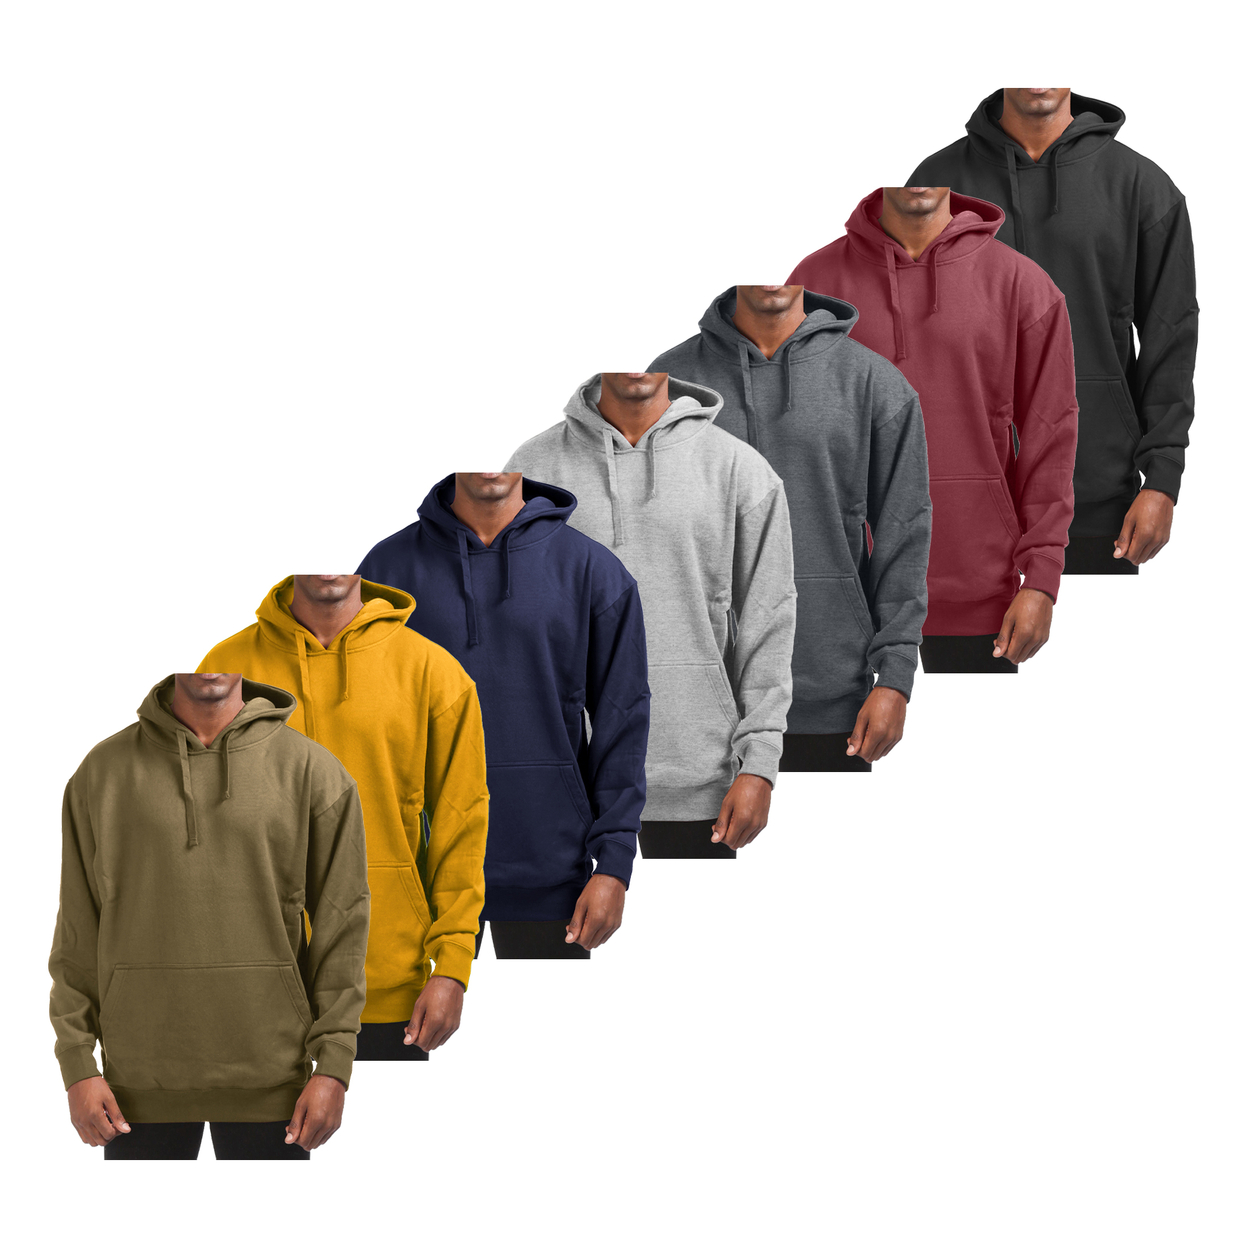 2-Pack: Men's Super-Soft Winter Warm Cotton-Blend Fleece Pullover Hoodie With Kangaroo Pocket - Black & Grey, Large